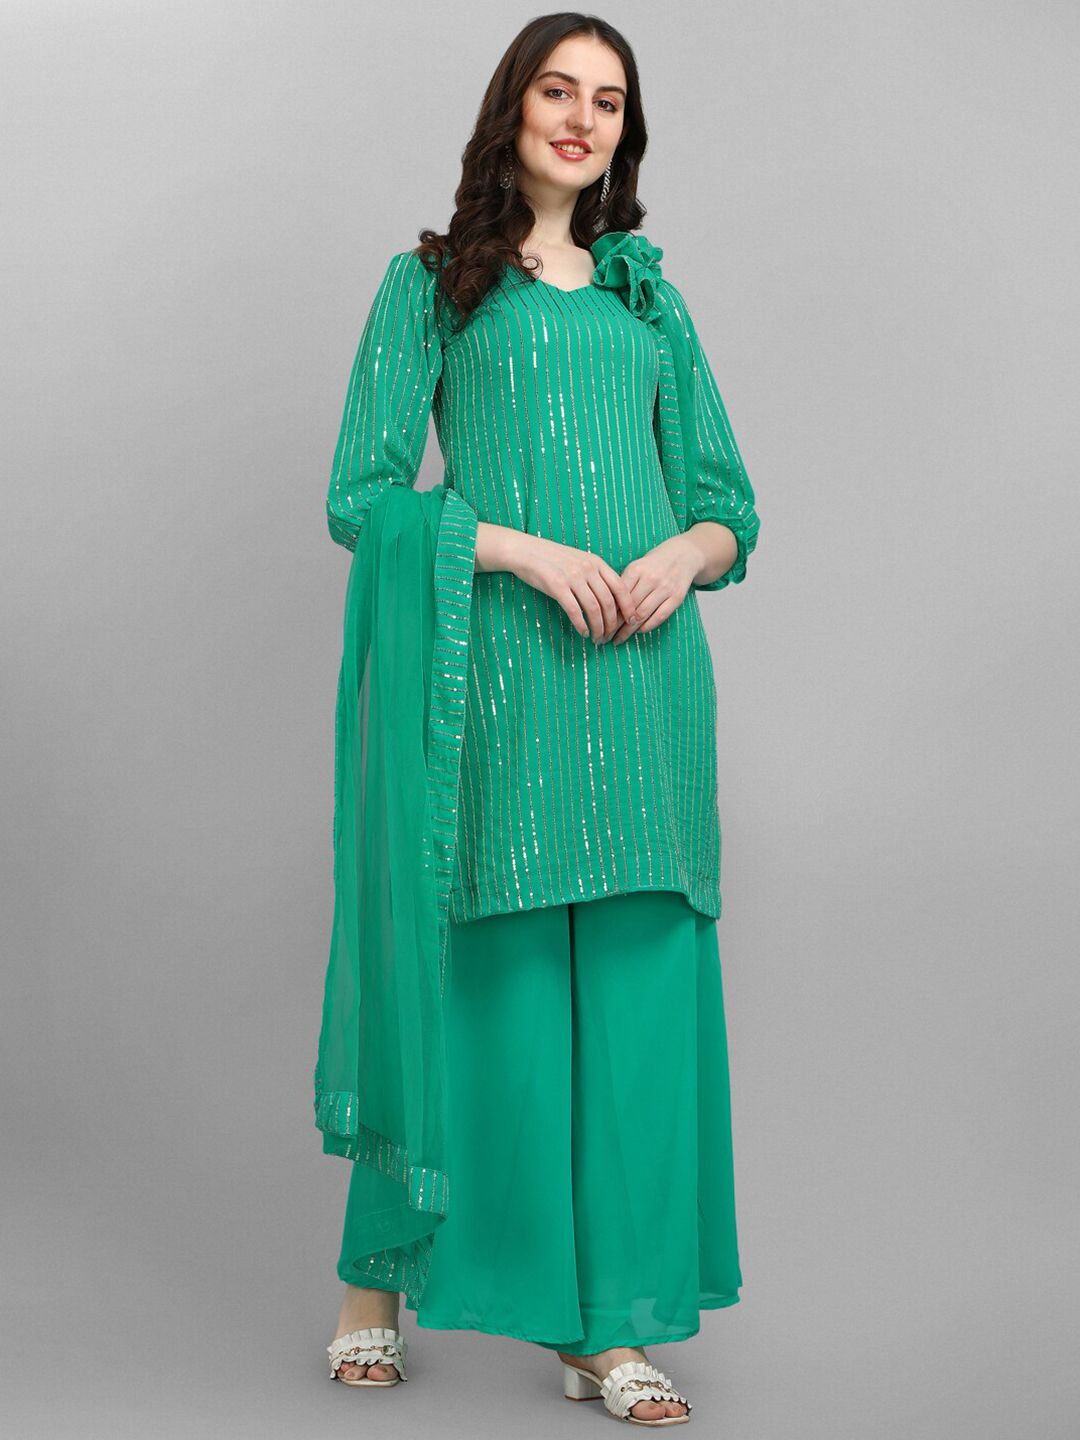 JATRIQQ Turquoise Blue Embellished Silk Georgette Semi-Stitched Dress Material Price in India